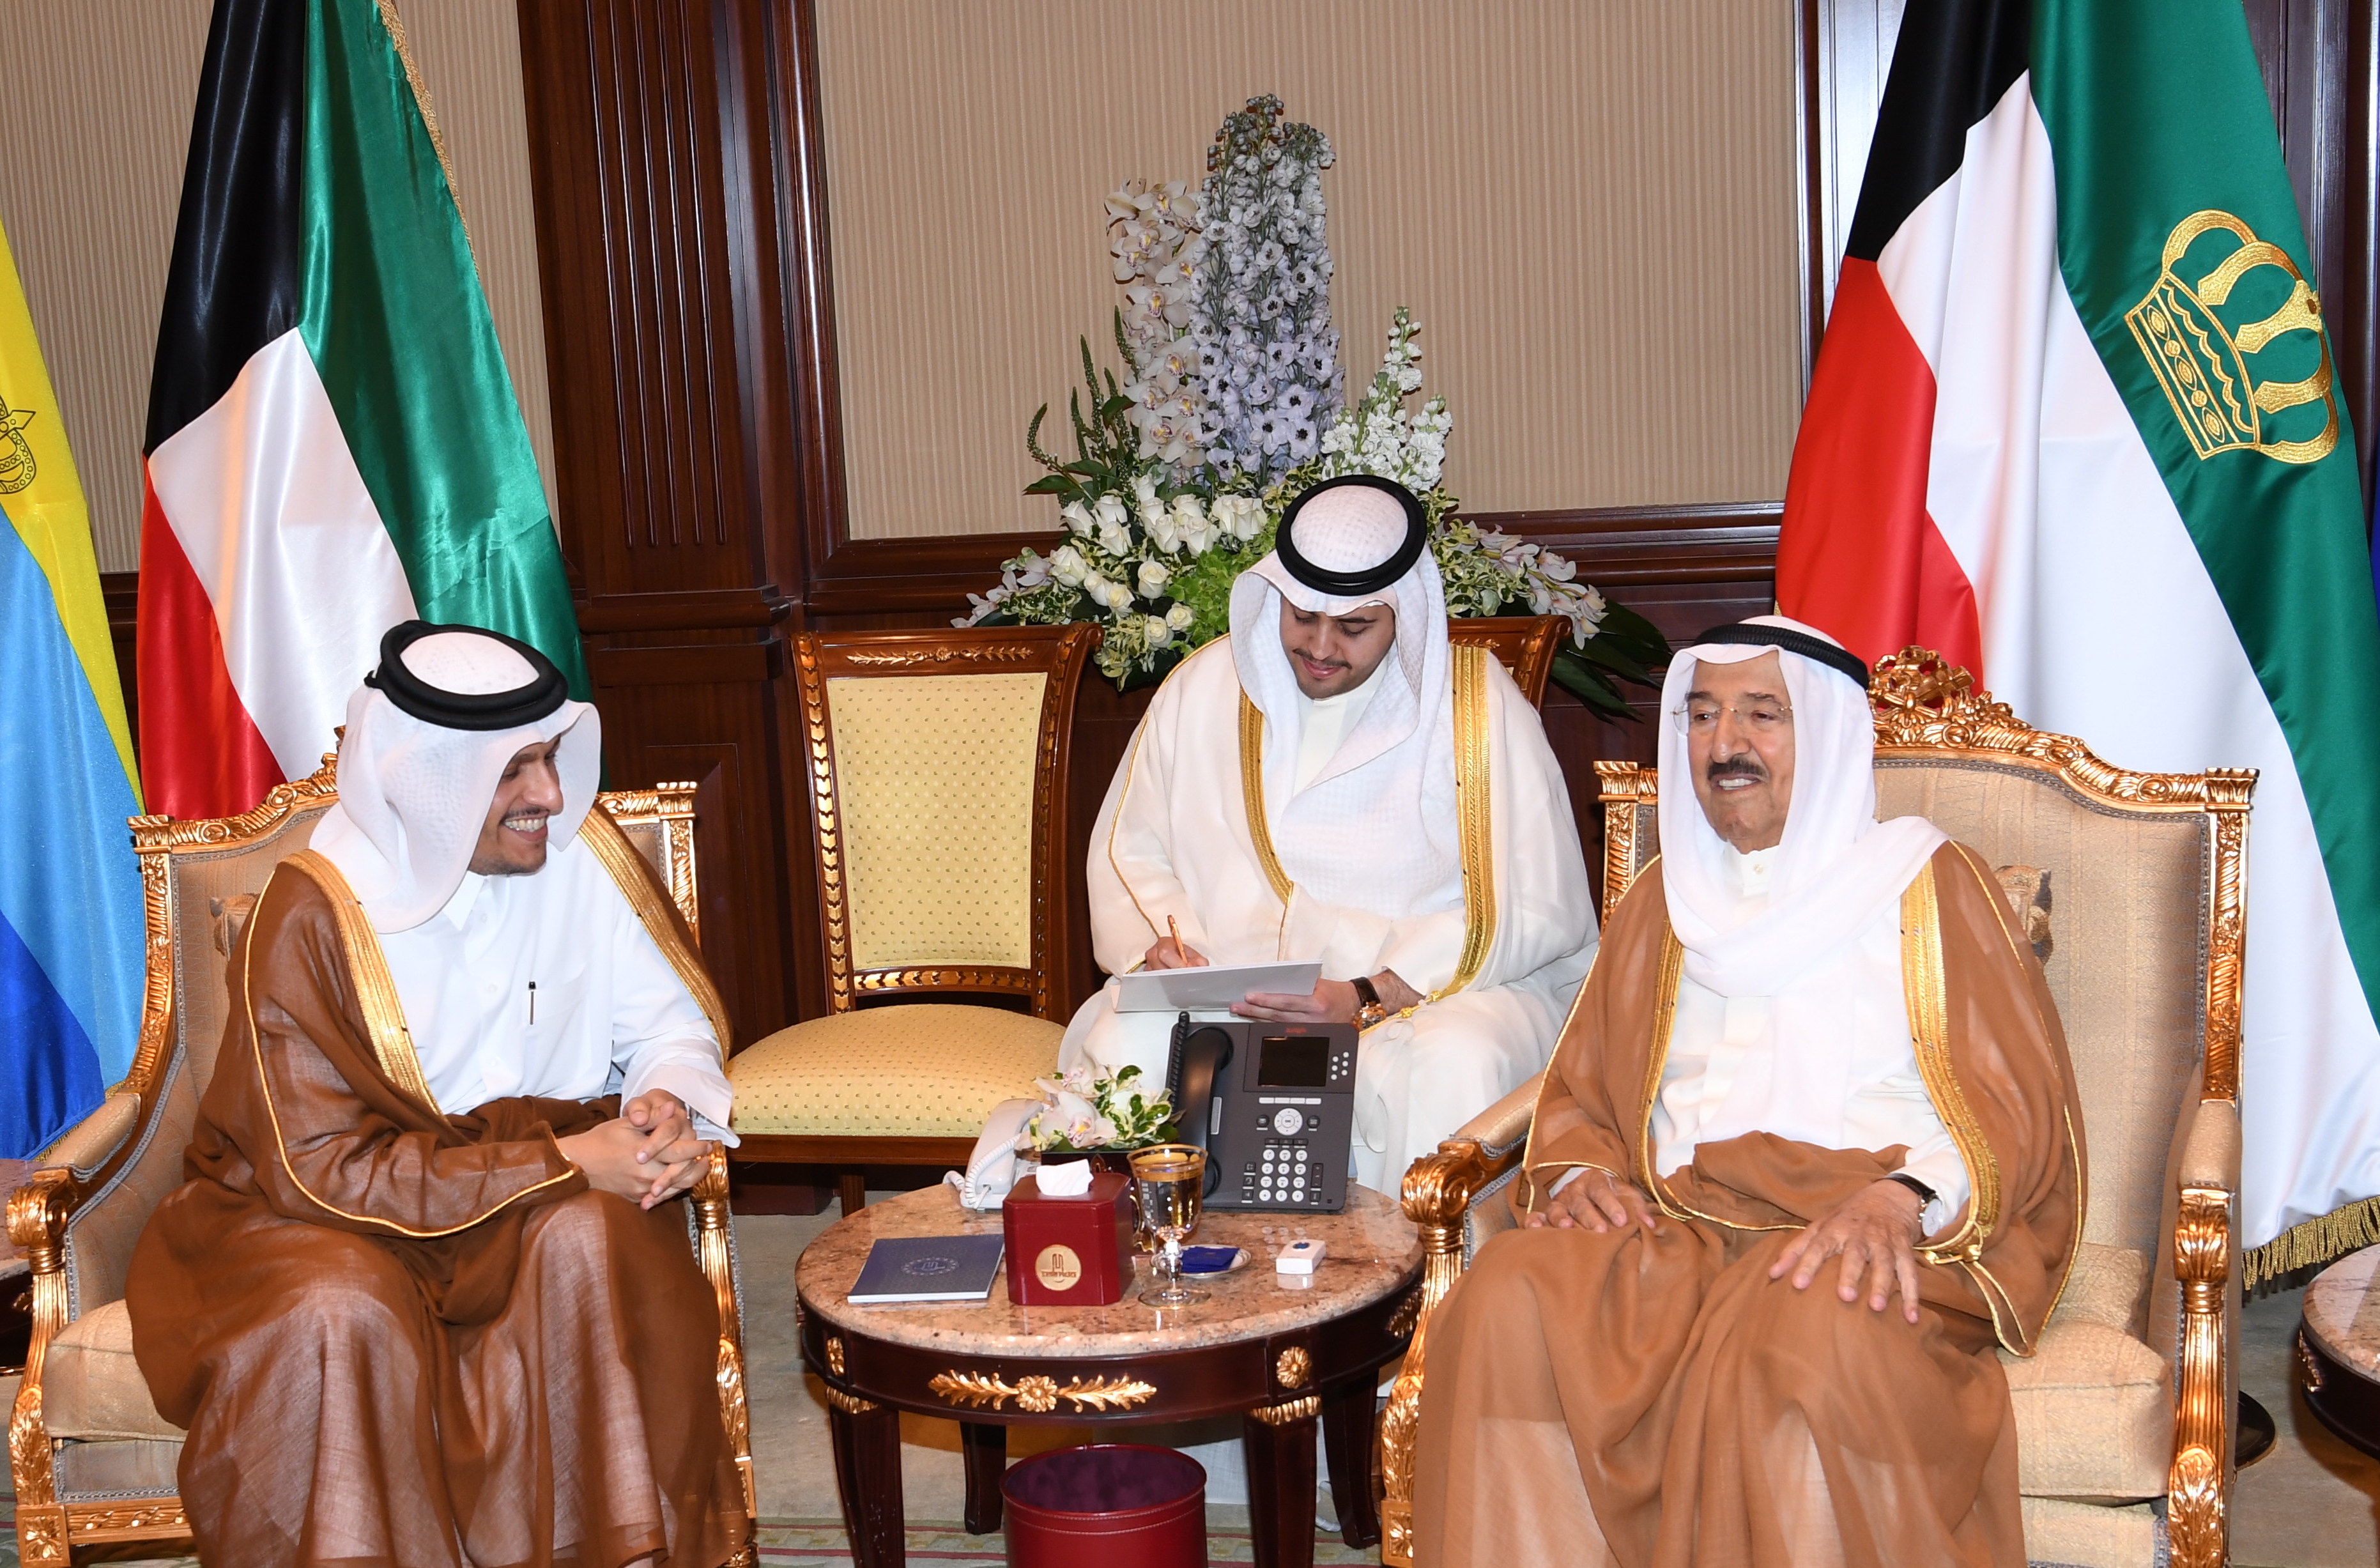 His Highness the Amir Sheikh Sabah Al-Ahmad Al-Jaber Al-Sabah received Deputy Prime Minister and Minister of Foreign Affairs Sheikh Mohammad bin Abdulrahman Al-Thani